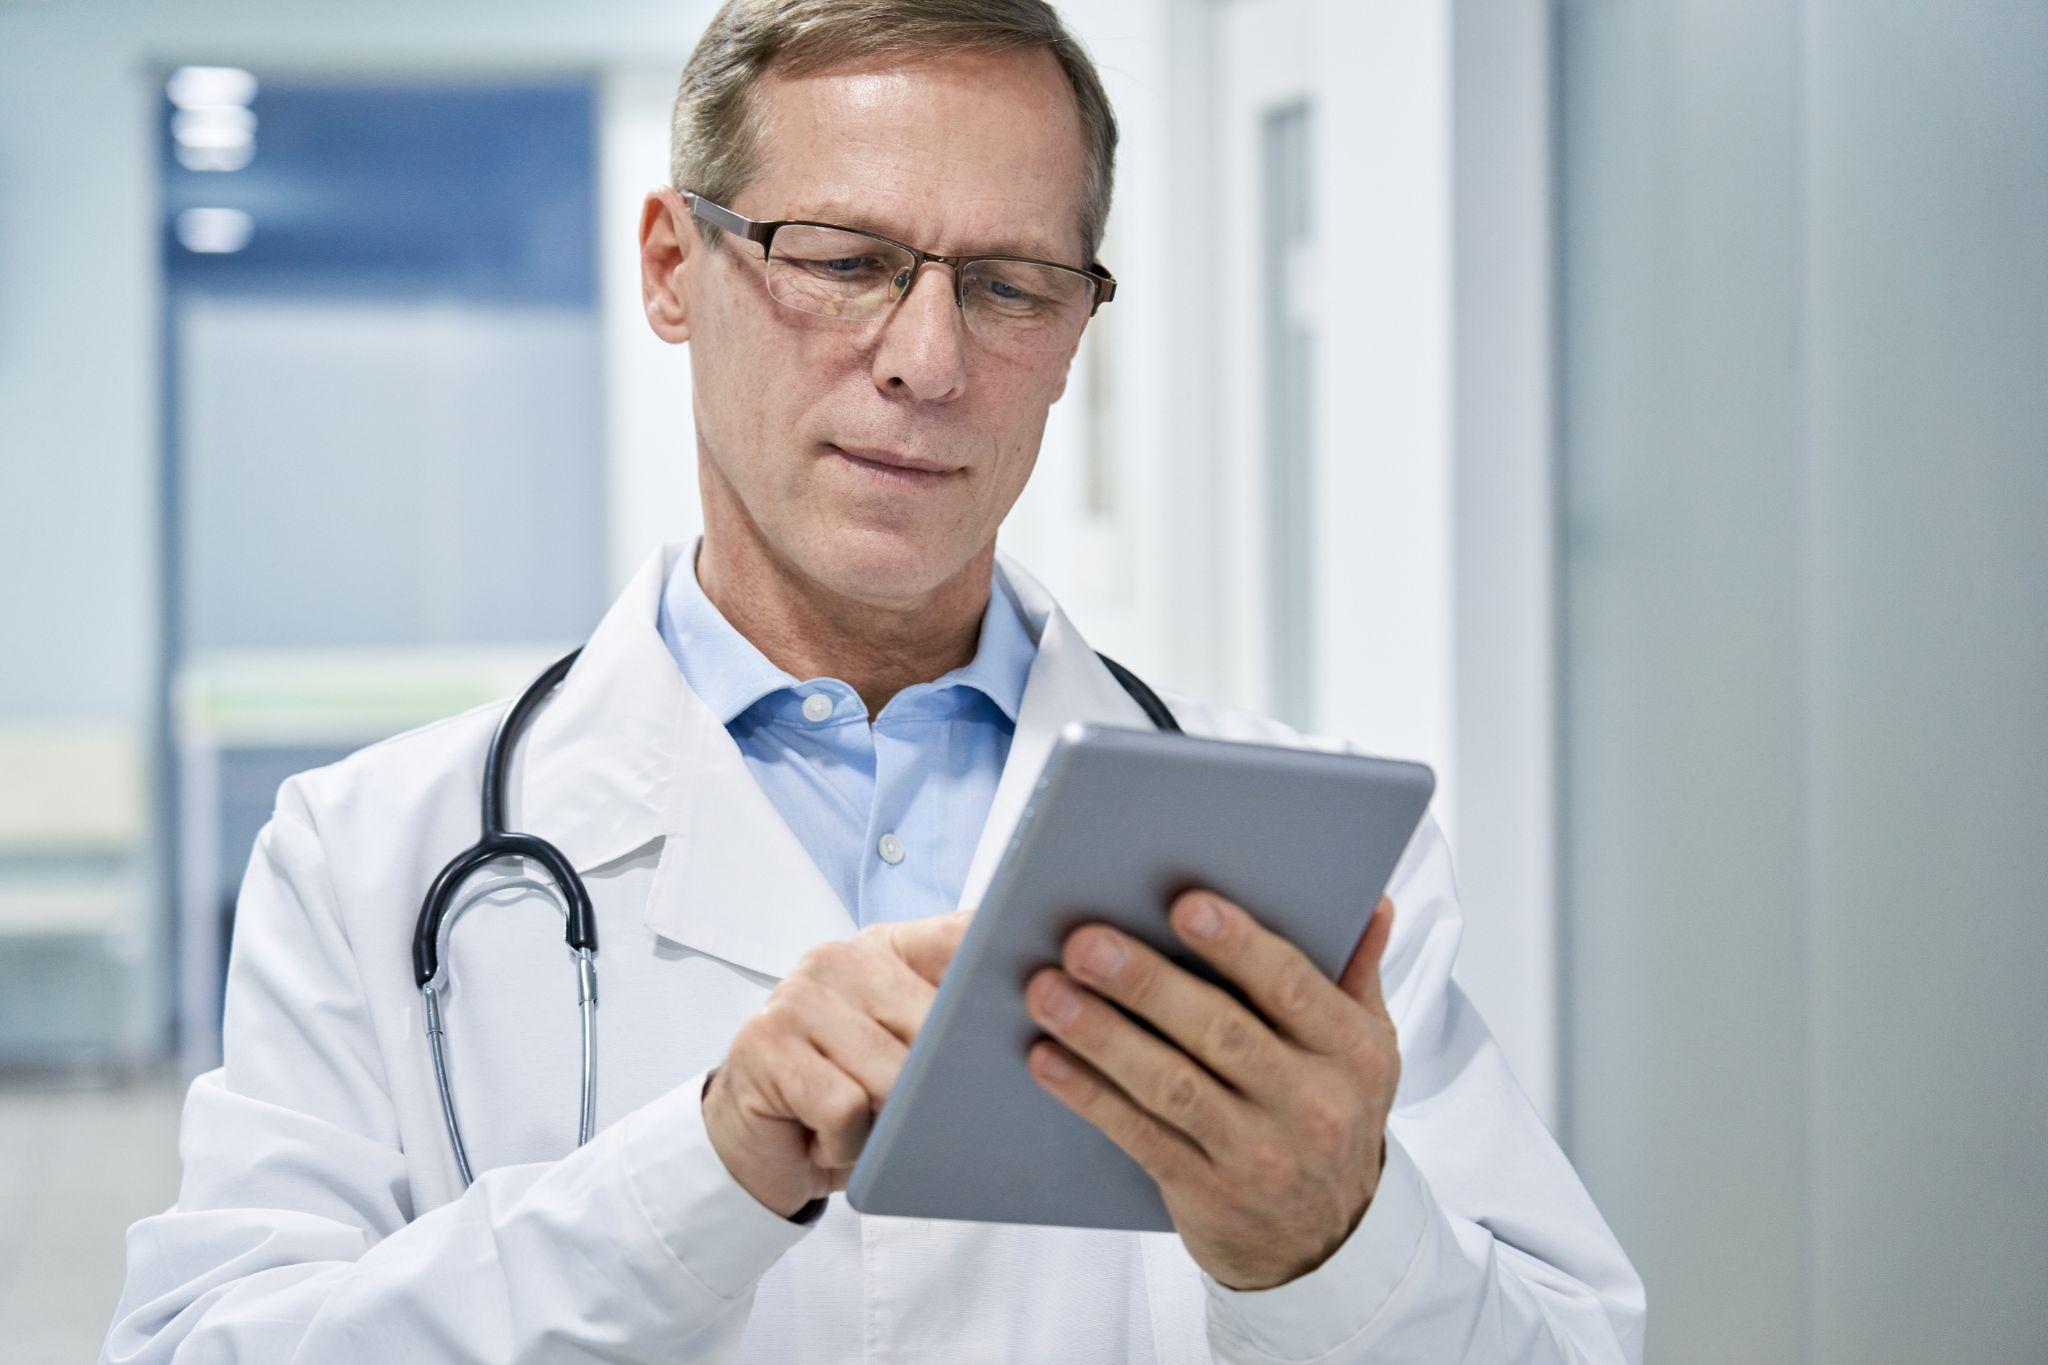 Doctor working in digital health